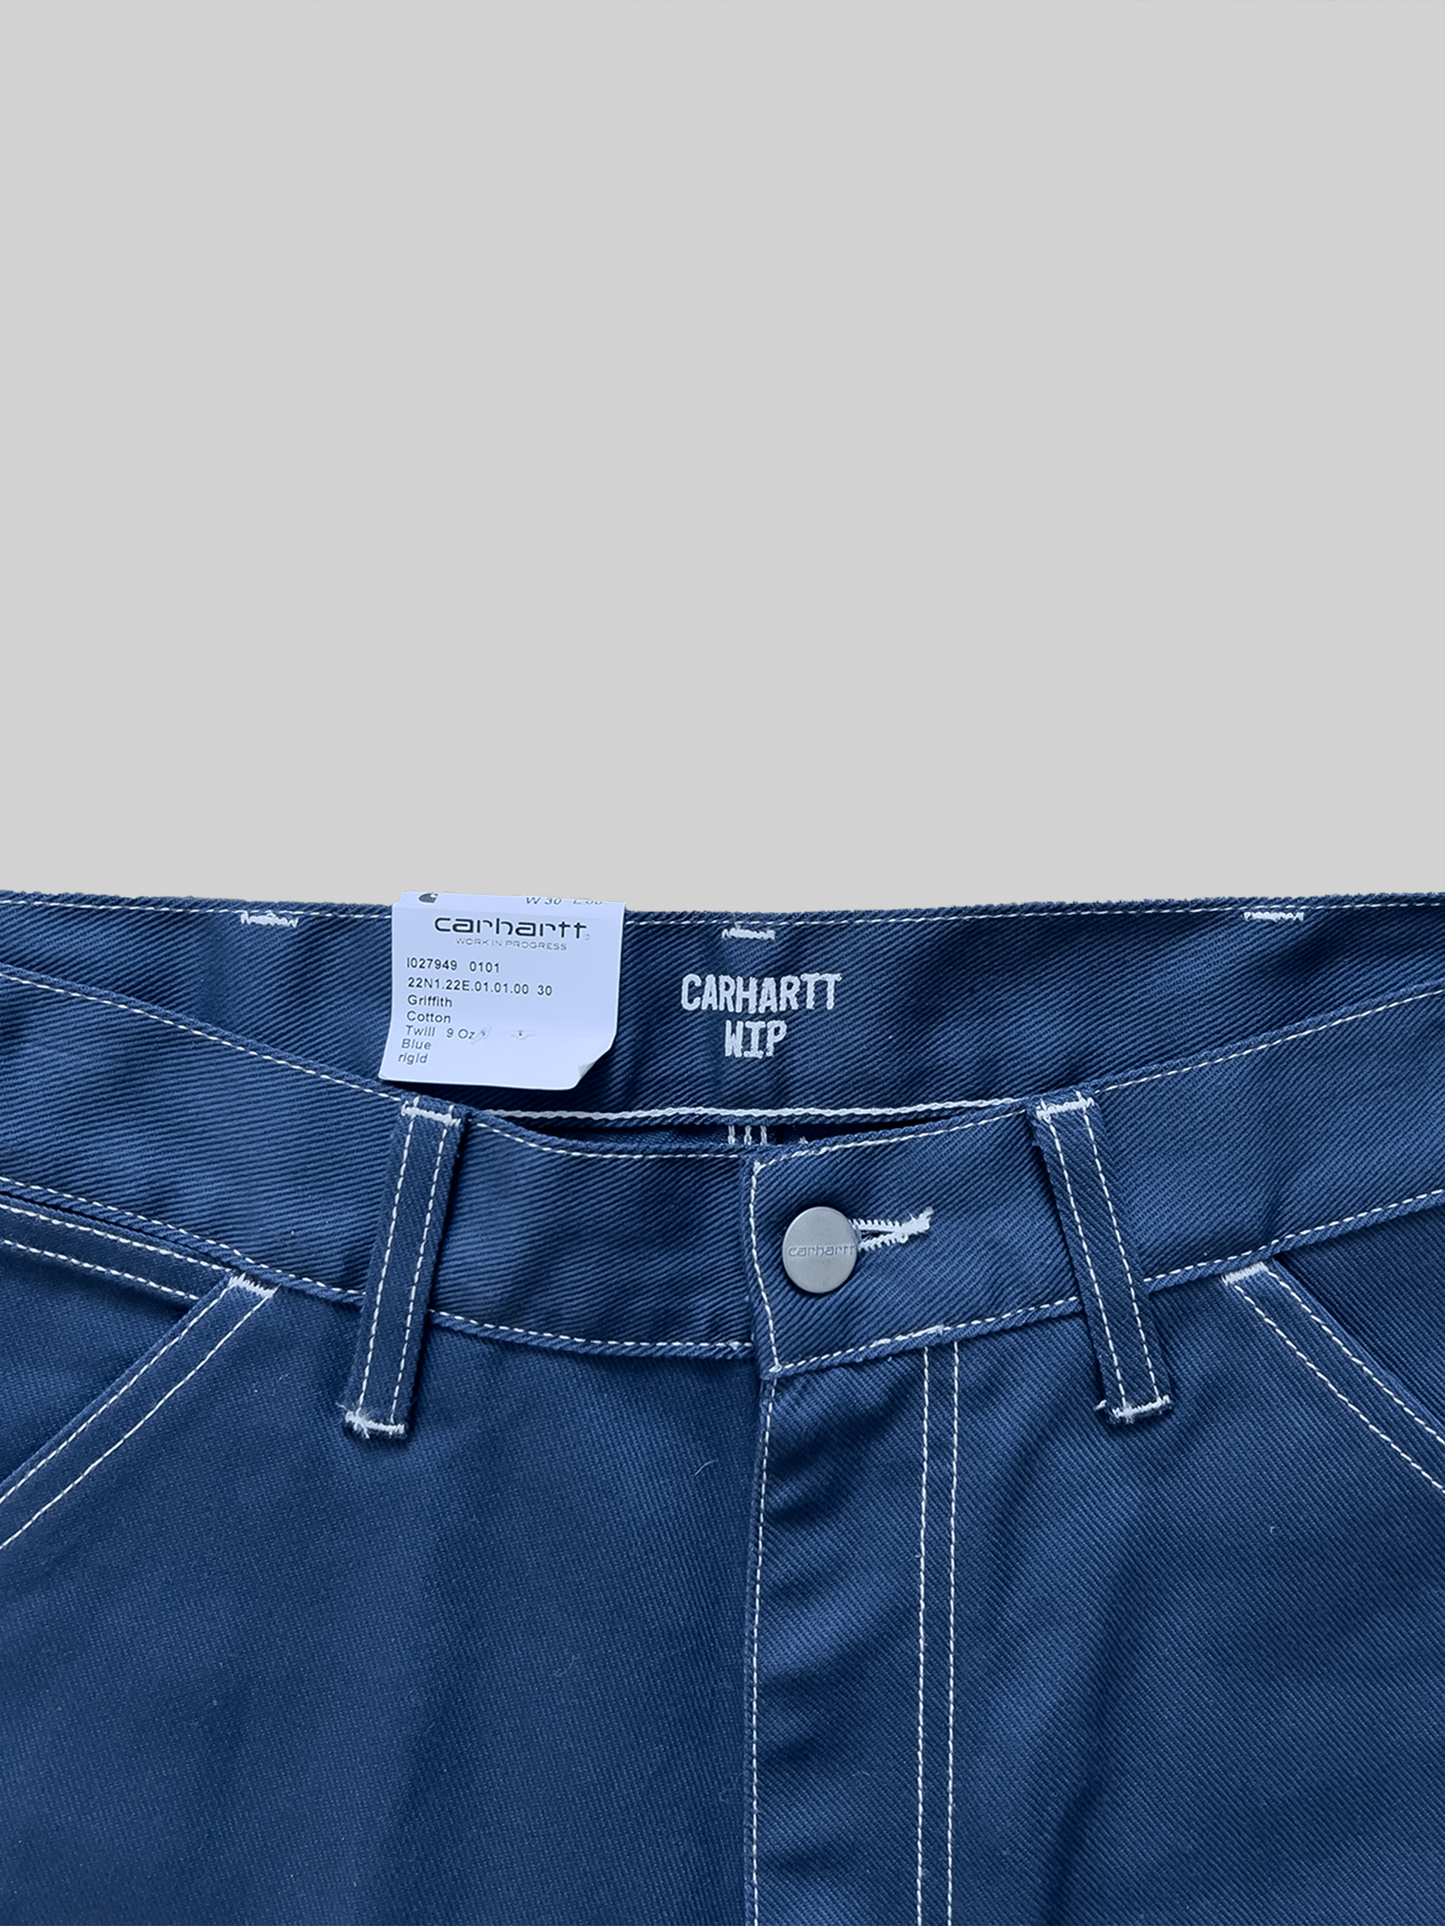 Kraťasy modré s bílým stitchingem Carhartt WIP Penrod Shorts (W30)